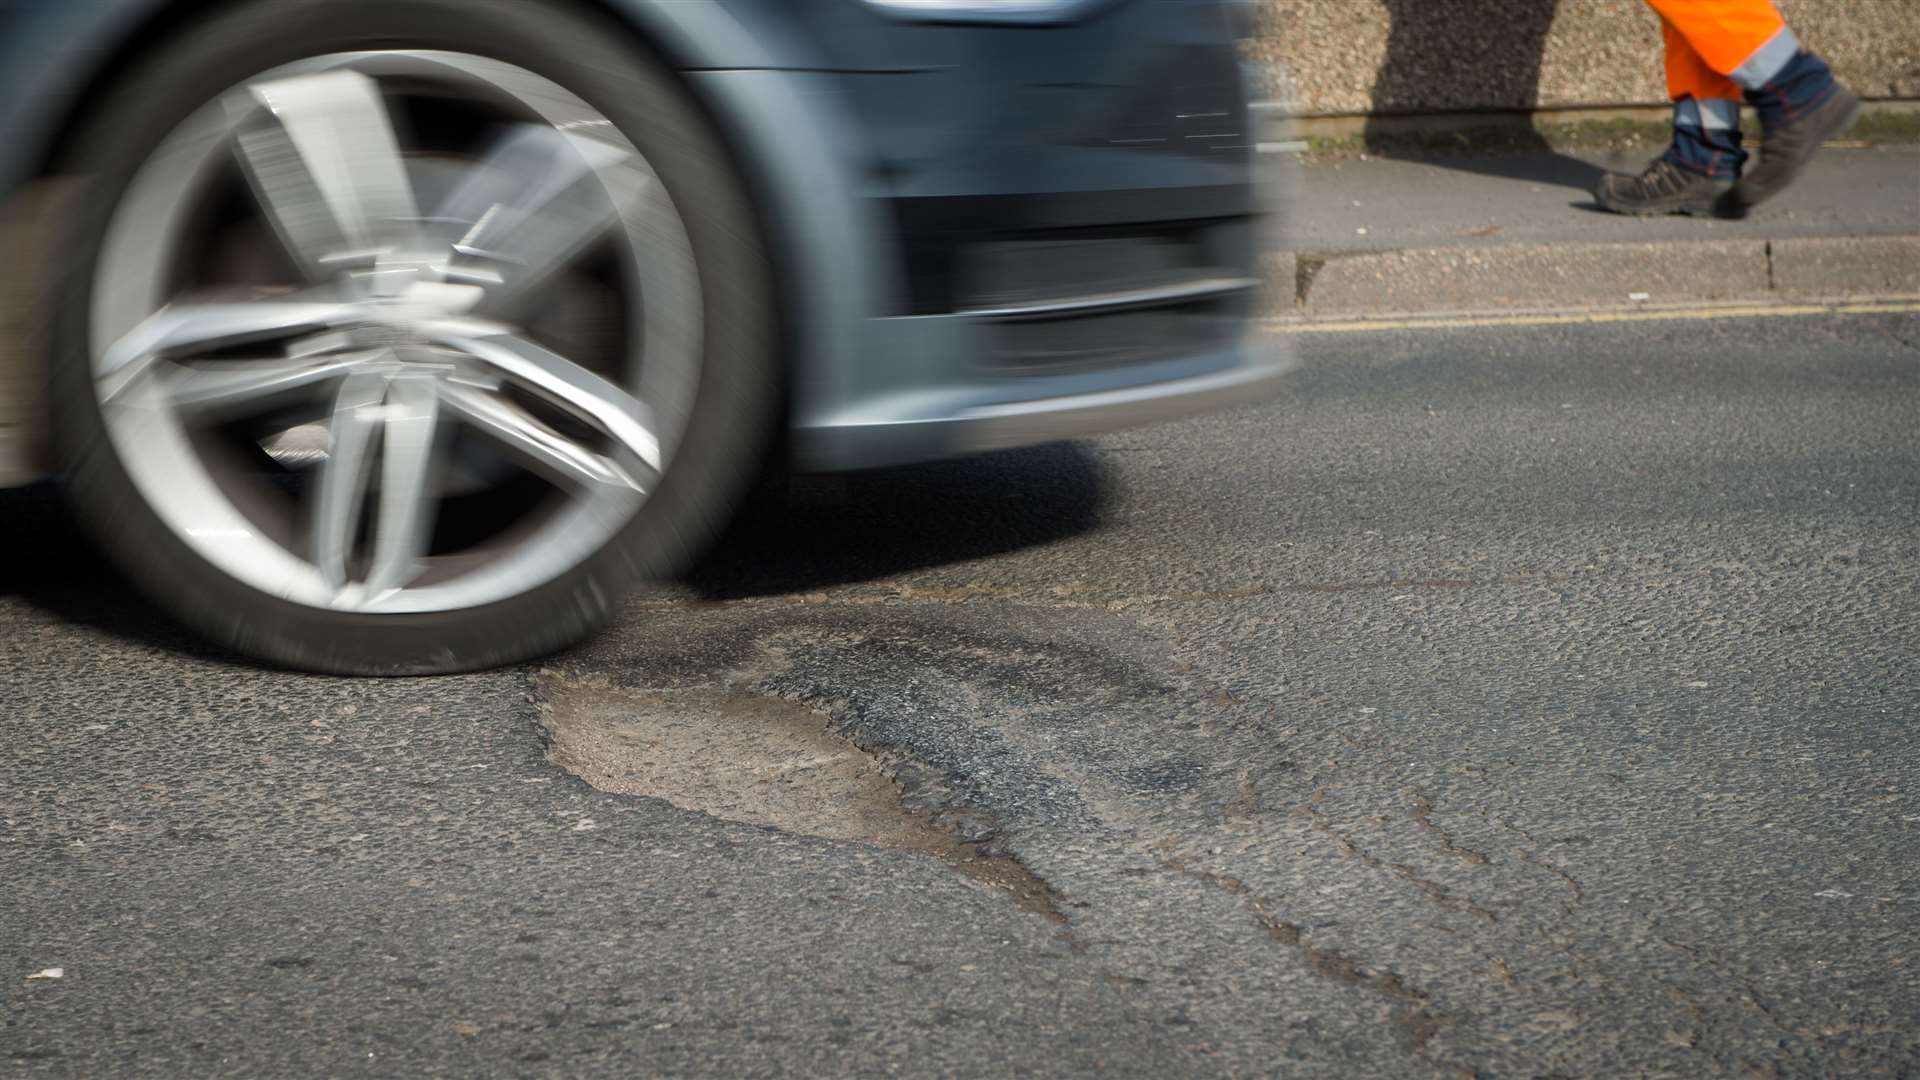 Potholes have been seen in roads across the city.